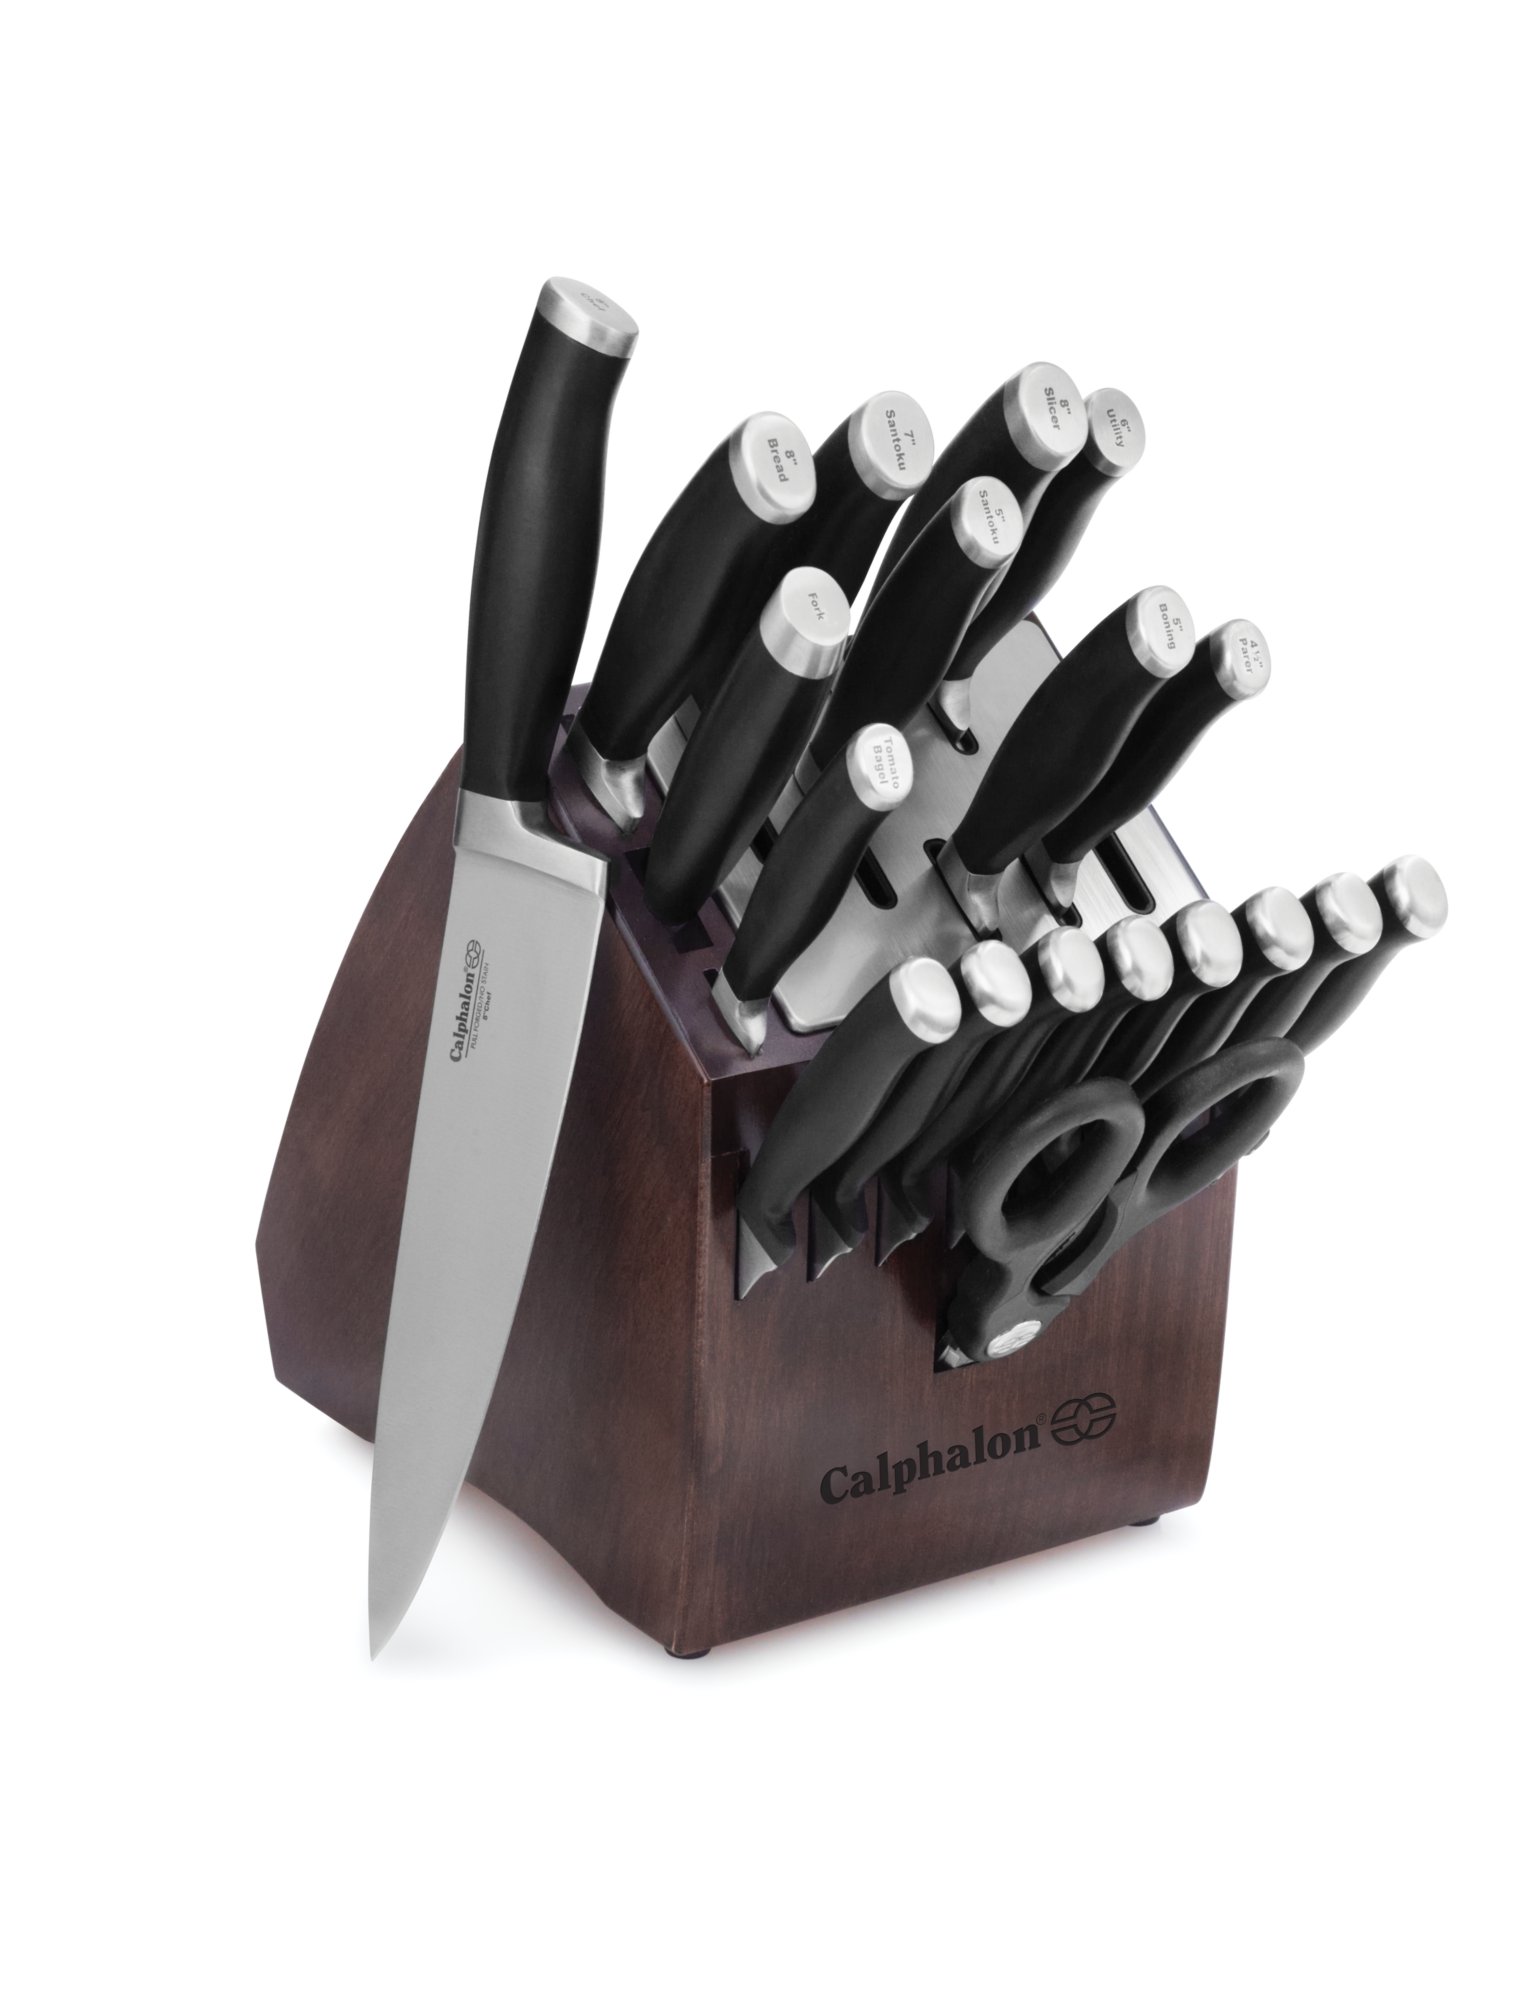 self sharpening knife block reviews